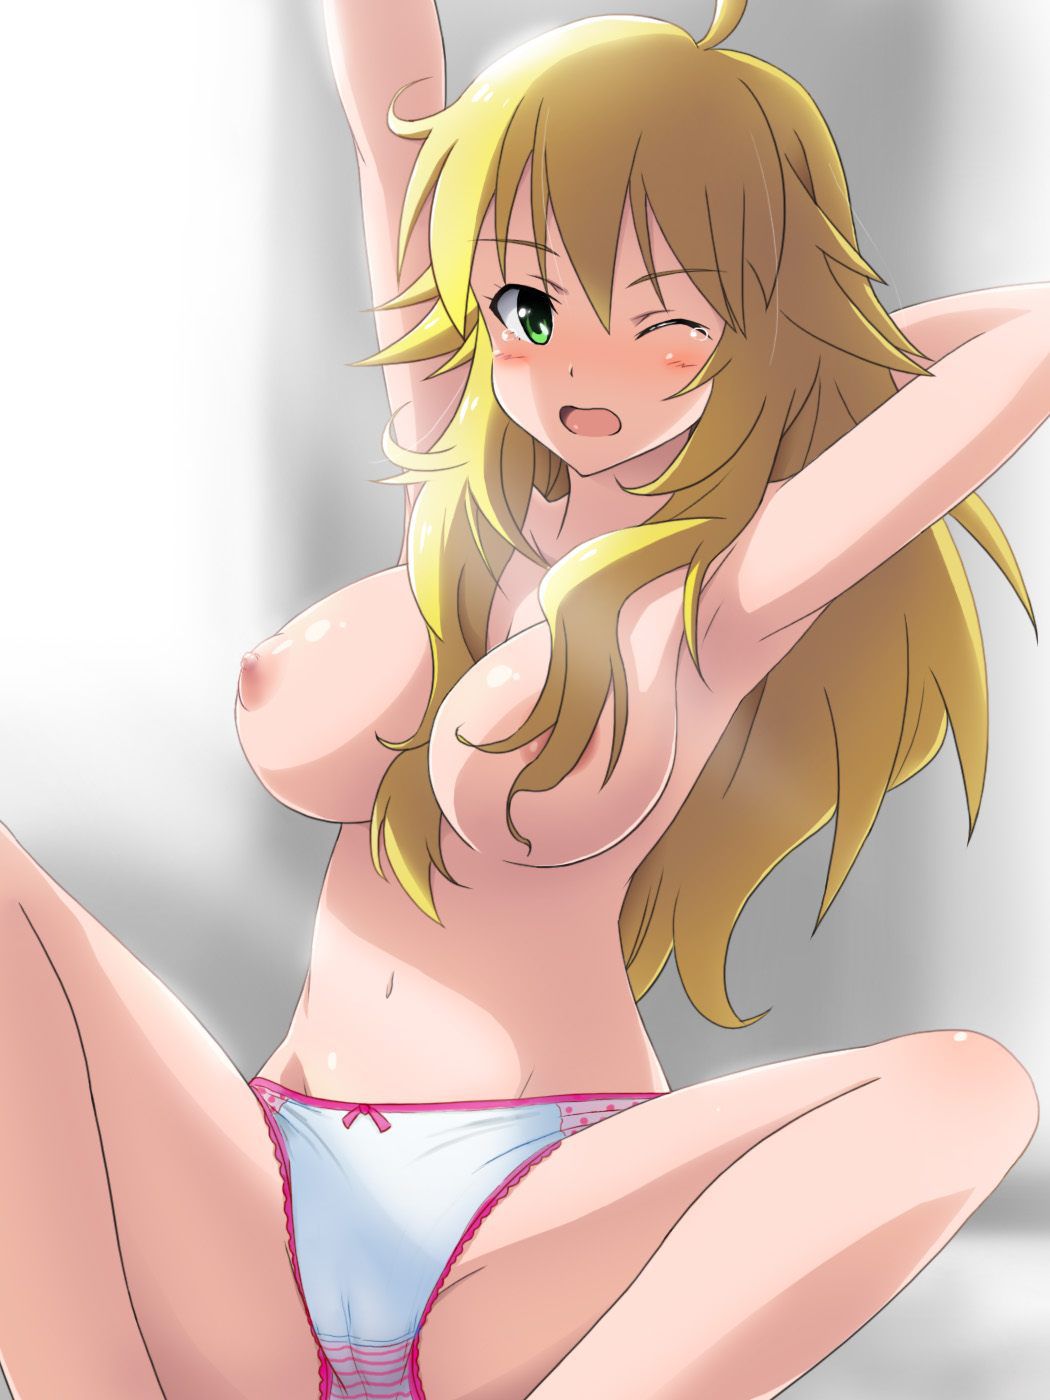 [Idol master] hoshii secondary erotic images Please oh. 24